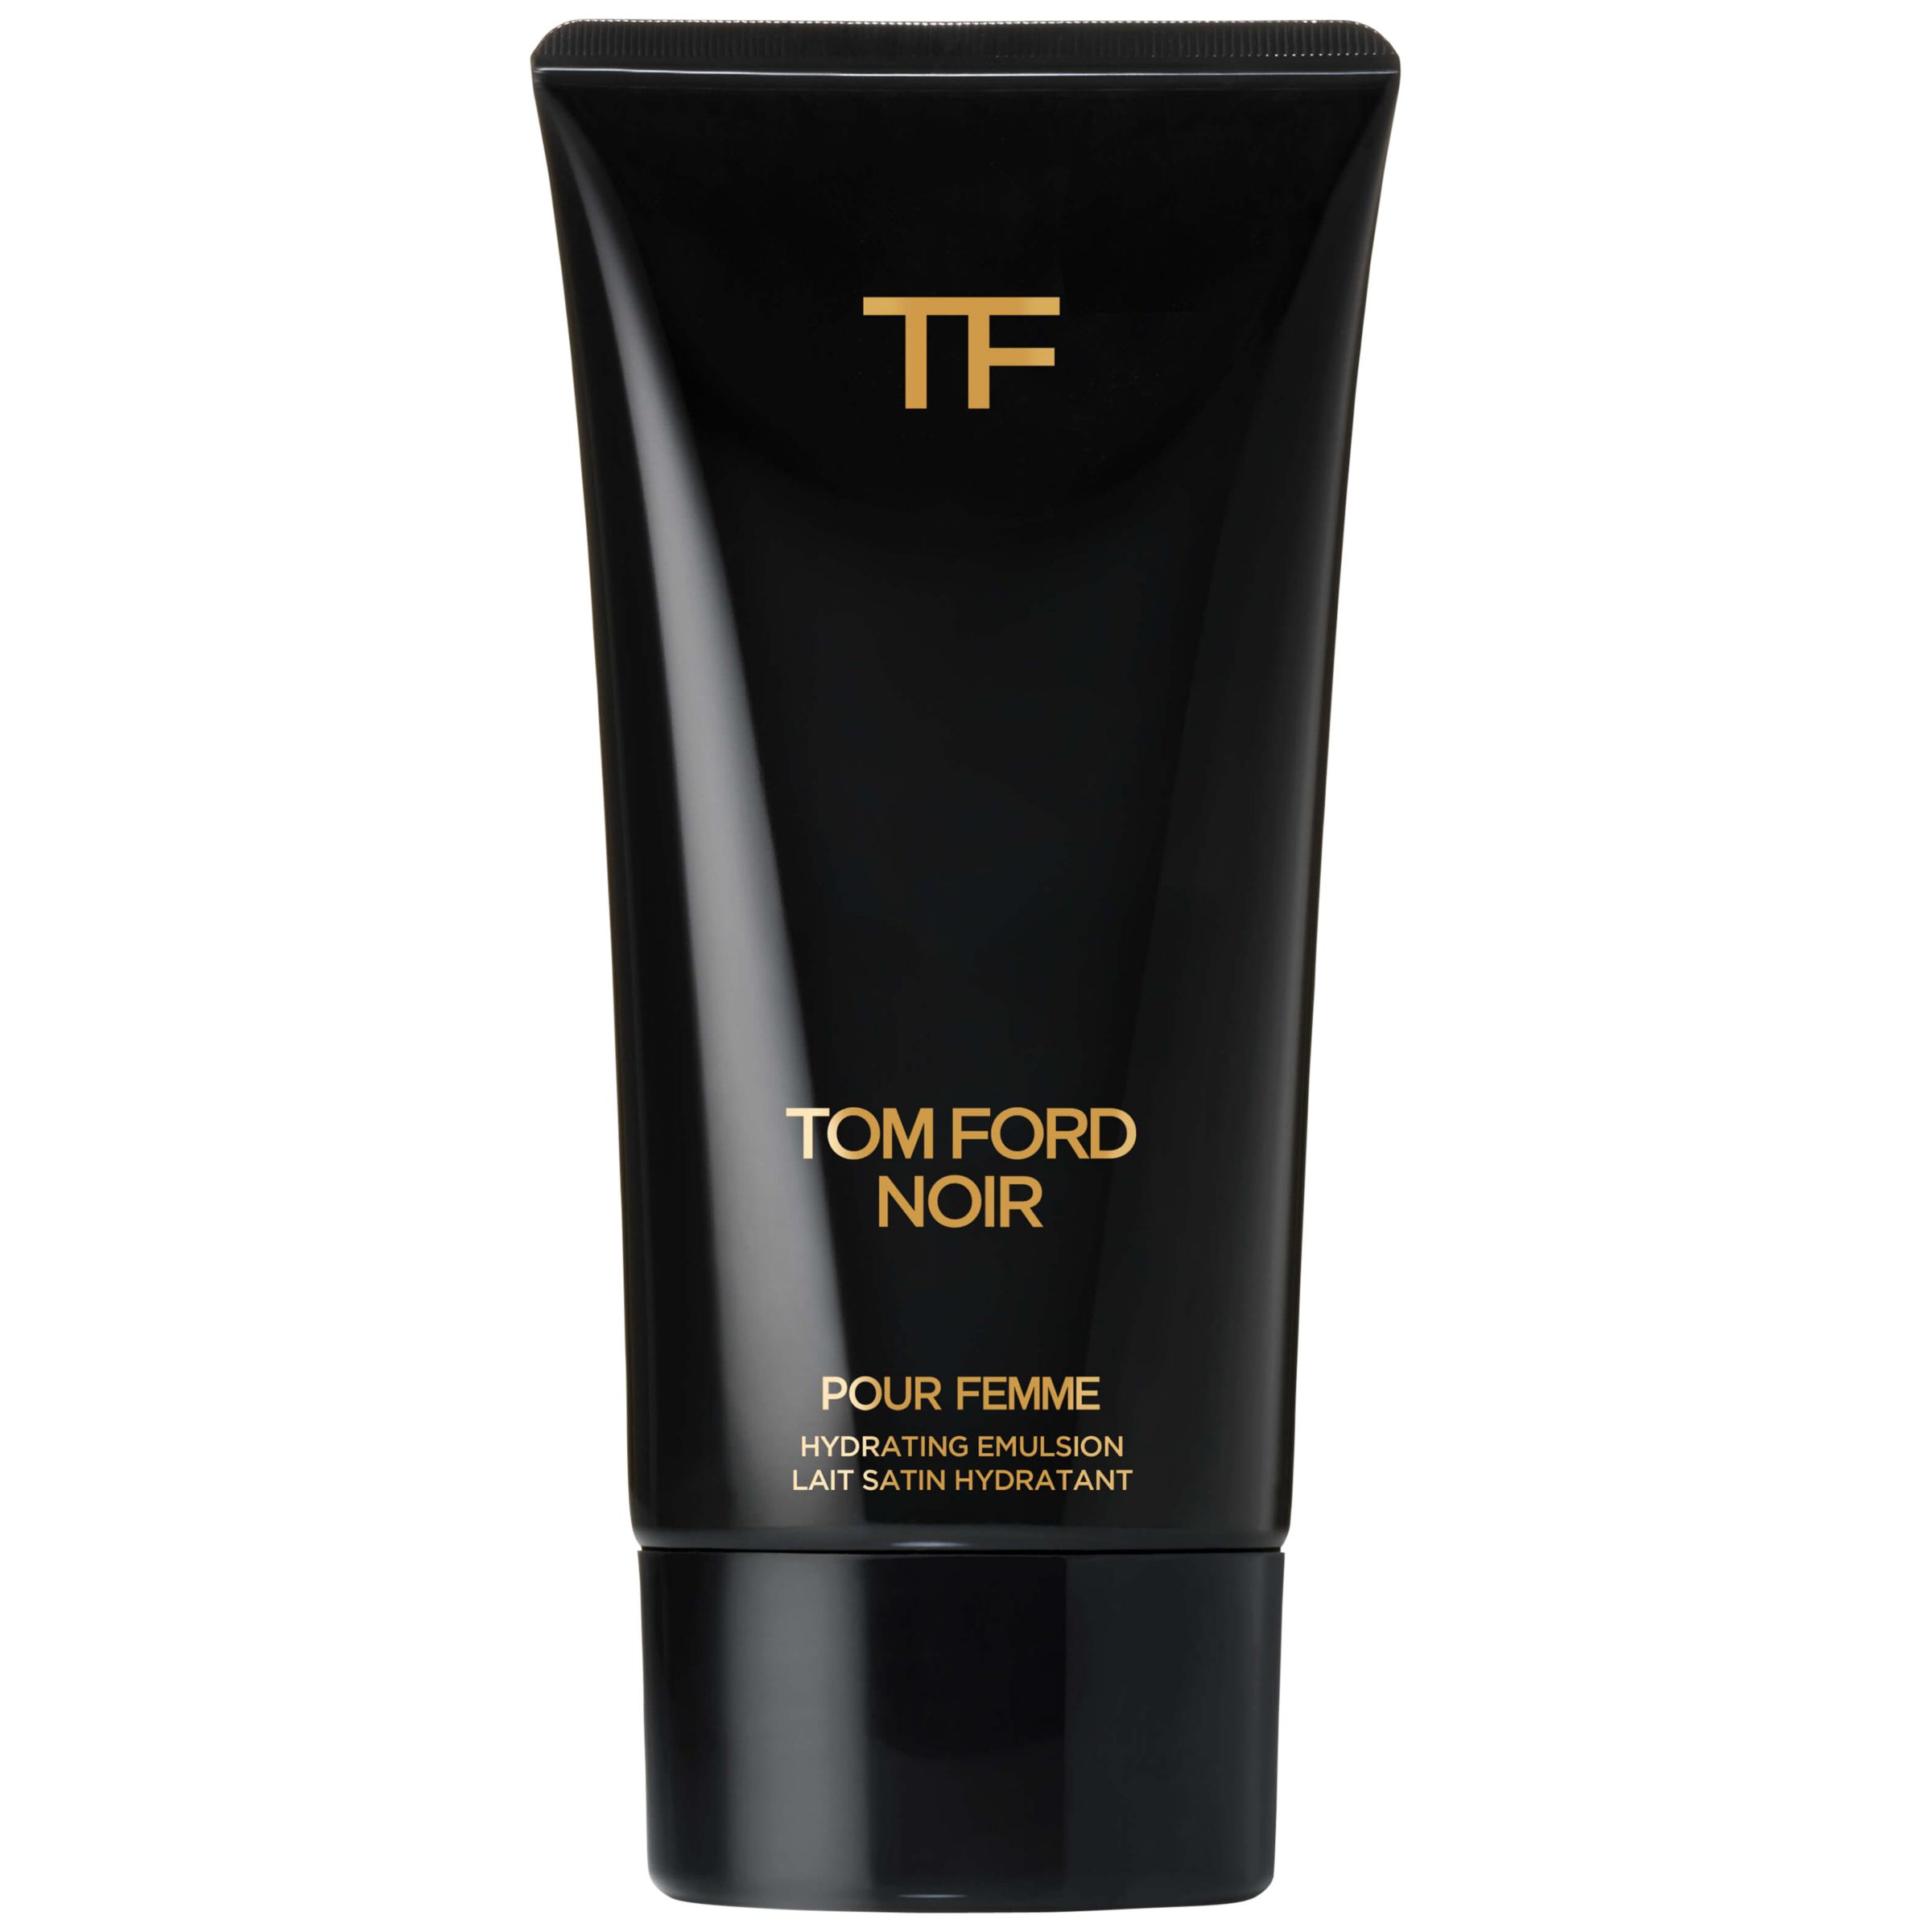 TOM FORD Noir Pour Femme Body Lotion, 150ml